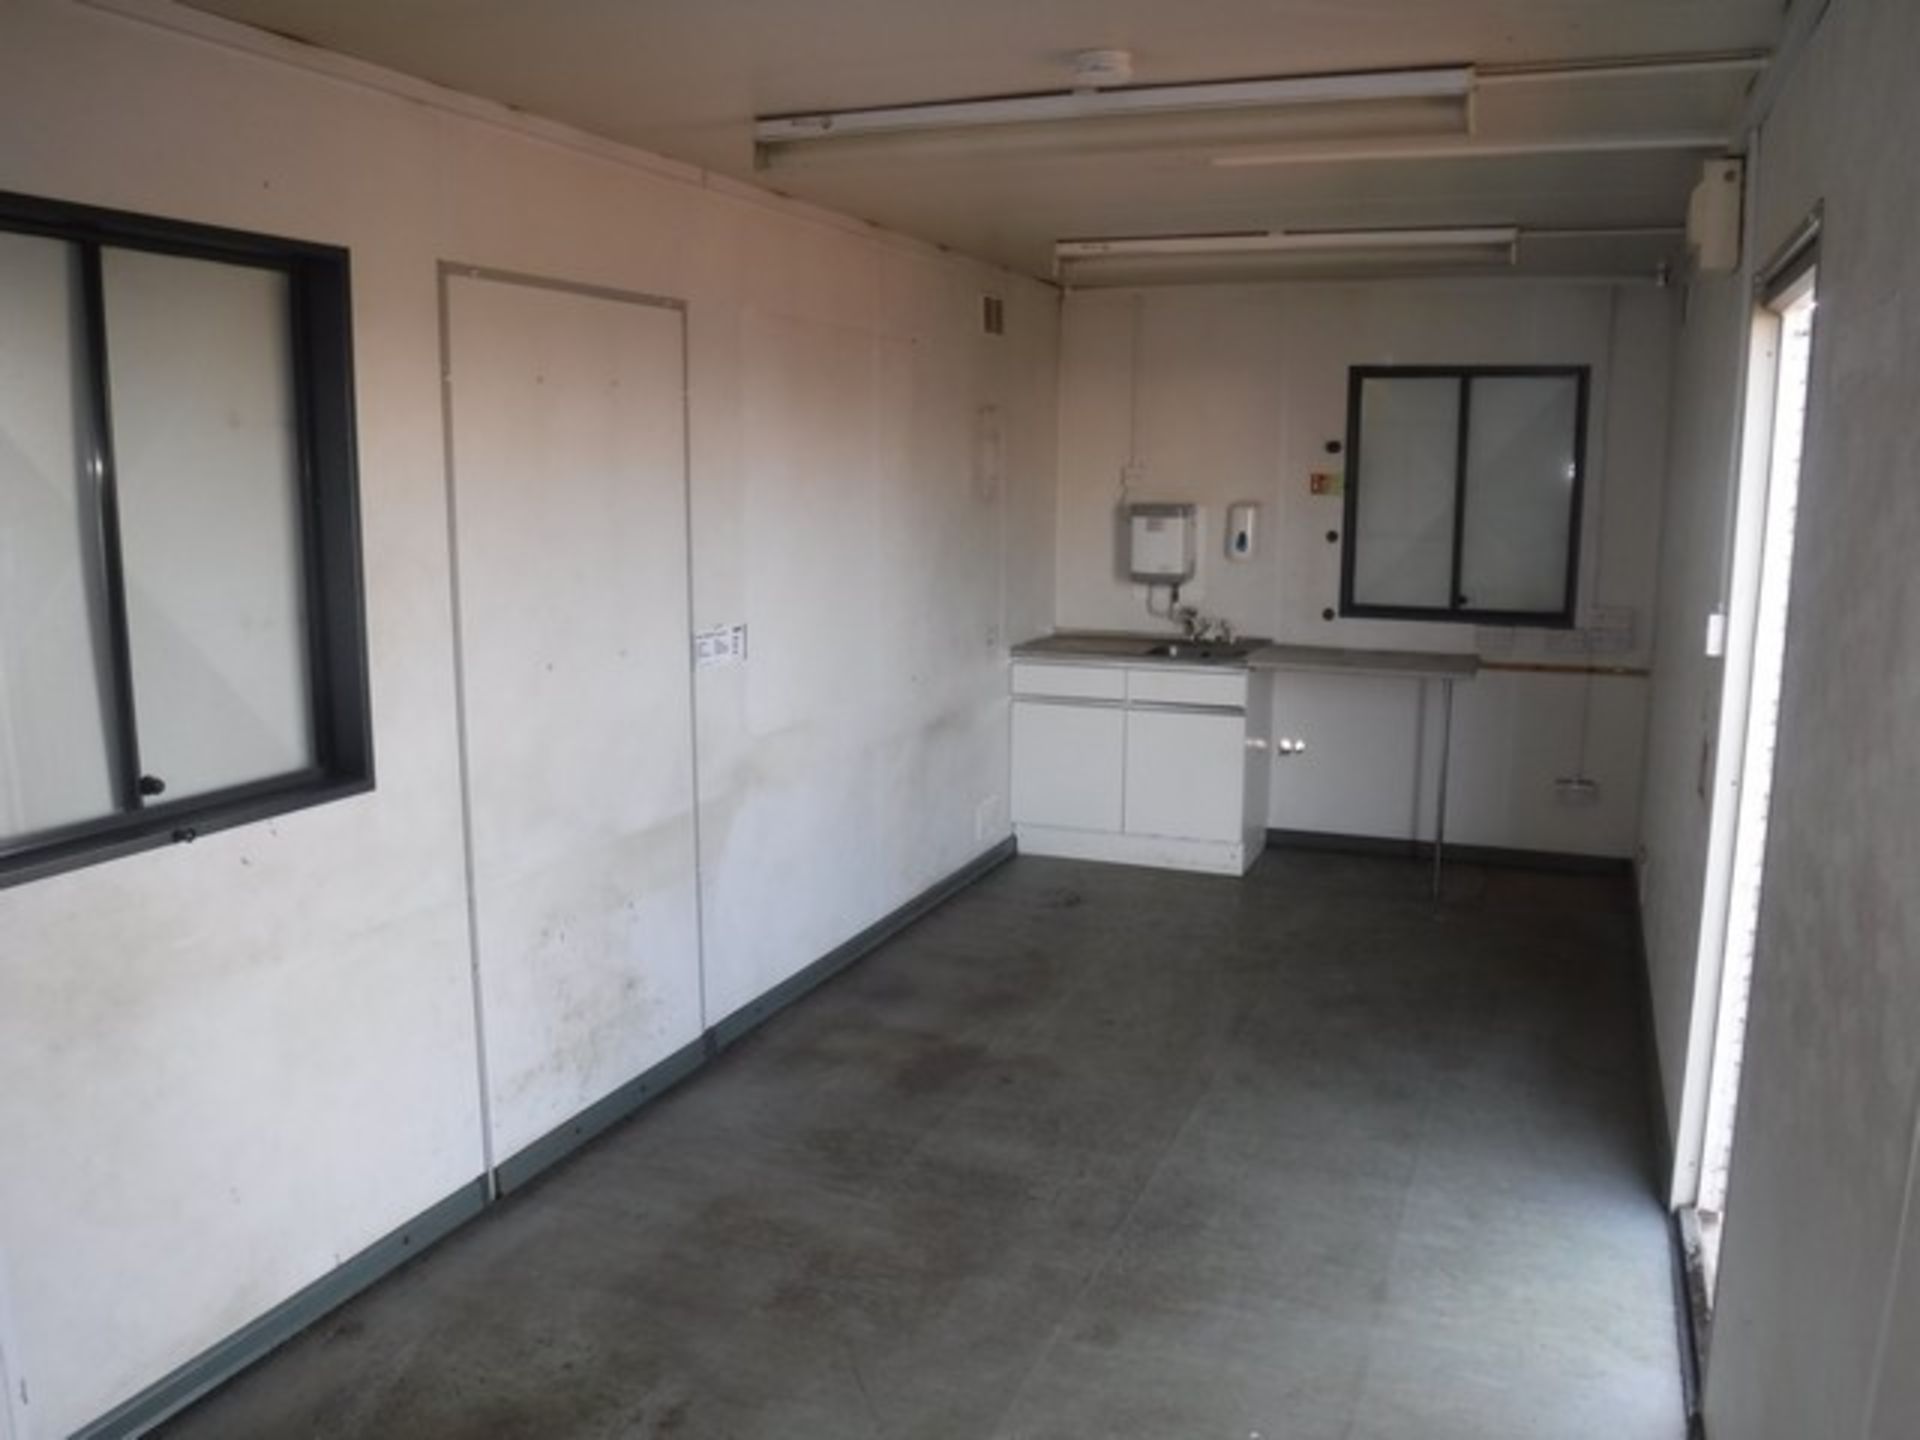 THURSTON 24' x 10' anti-vandal canteen cabin c/w water heater, sink, worktop S/N M35404. Keys in off - Image 4 of 6